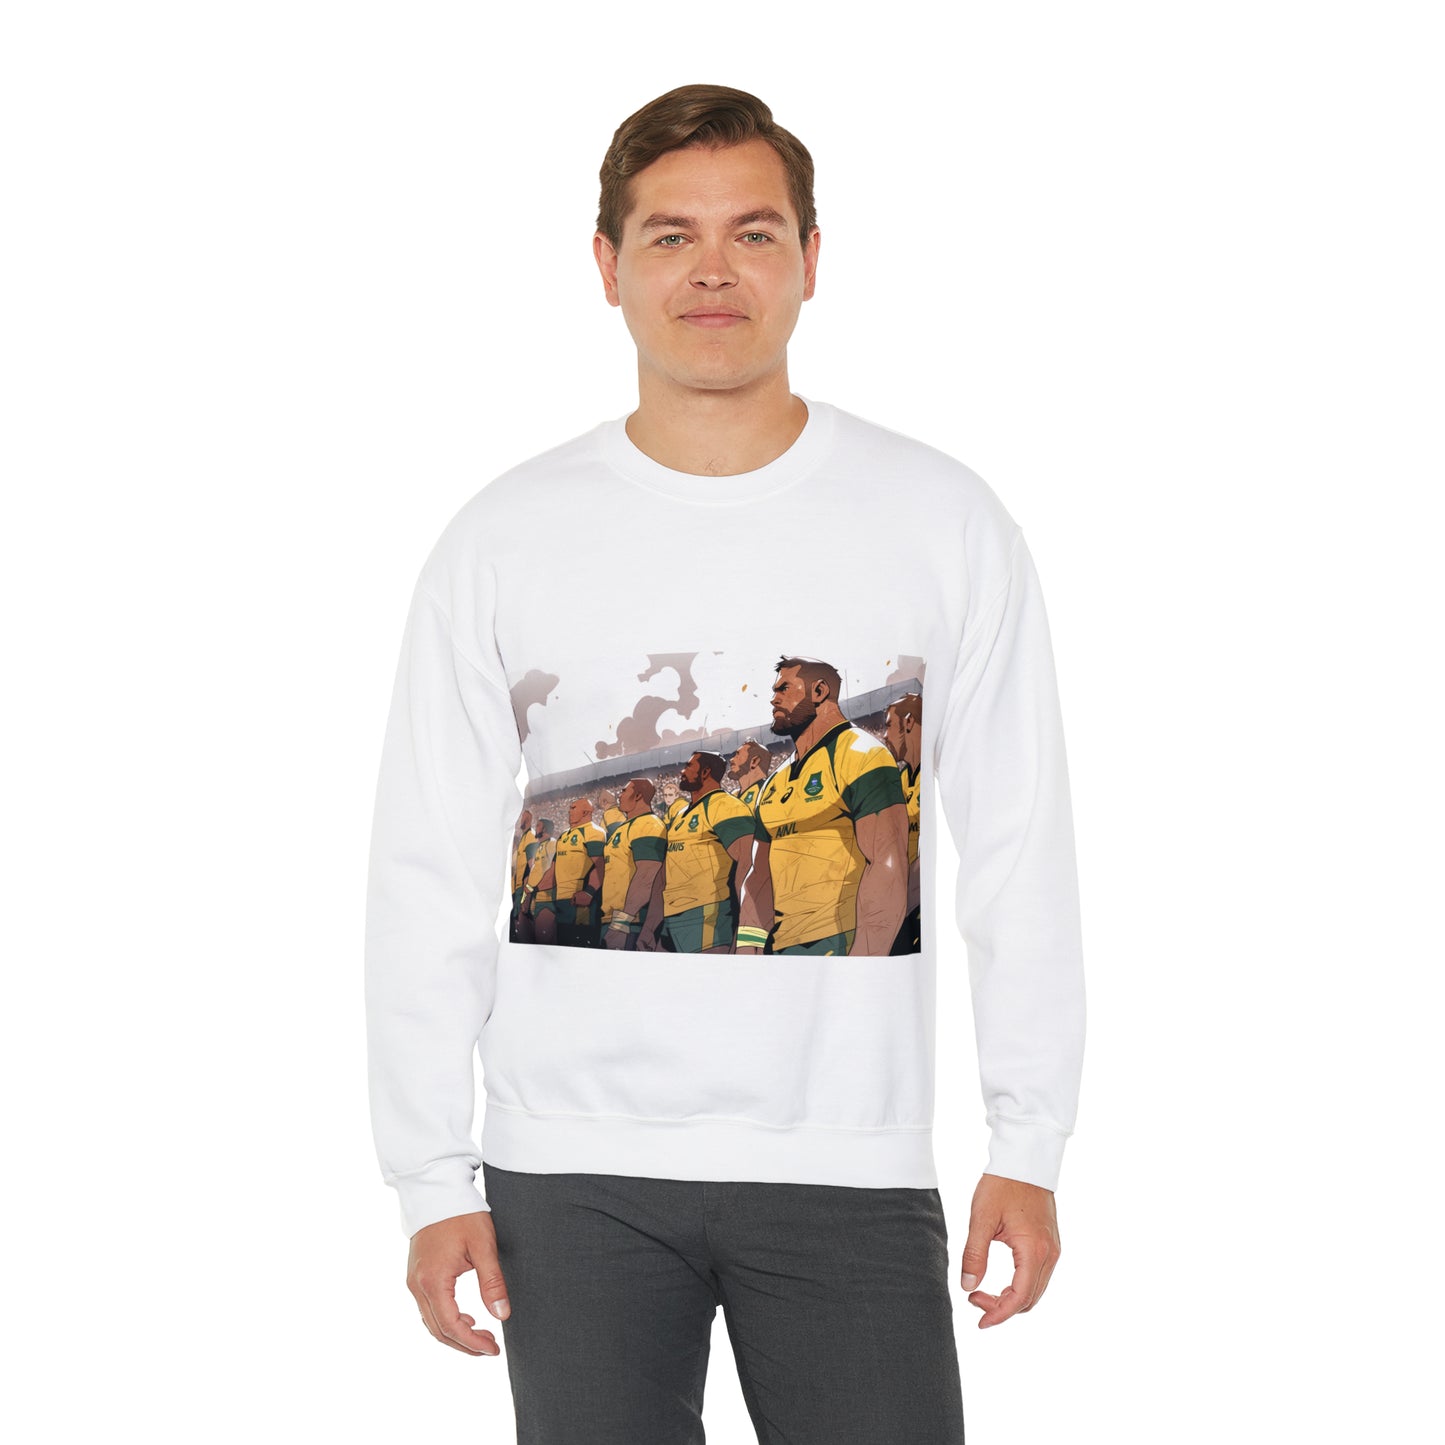 Ready Australia - light sweatshirts